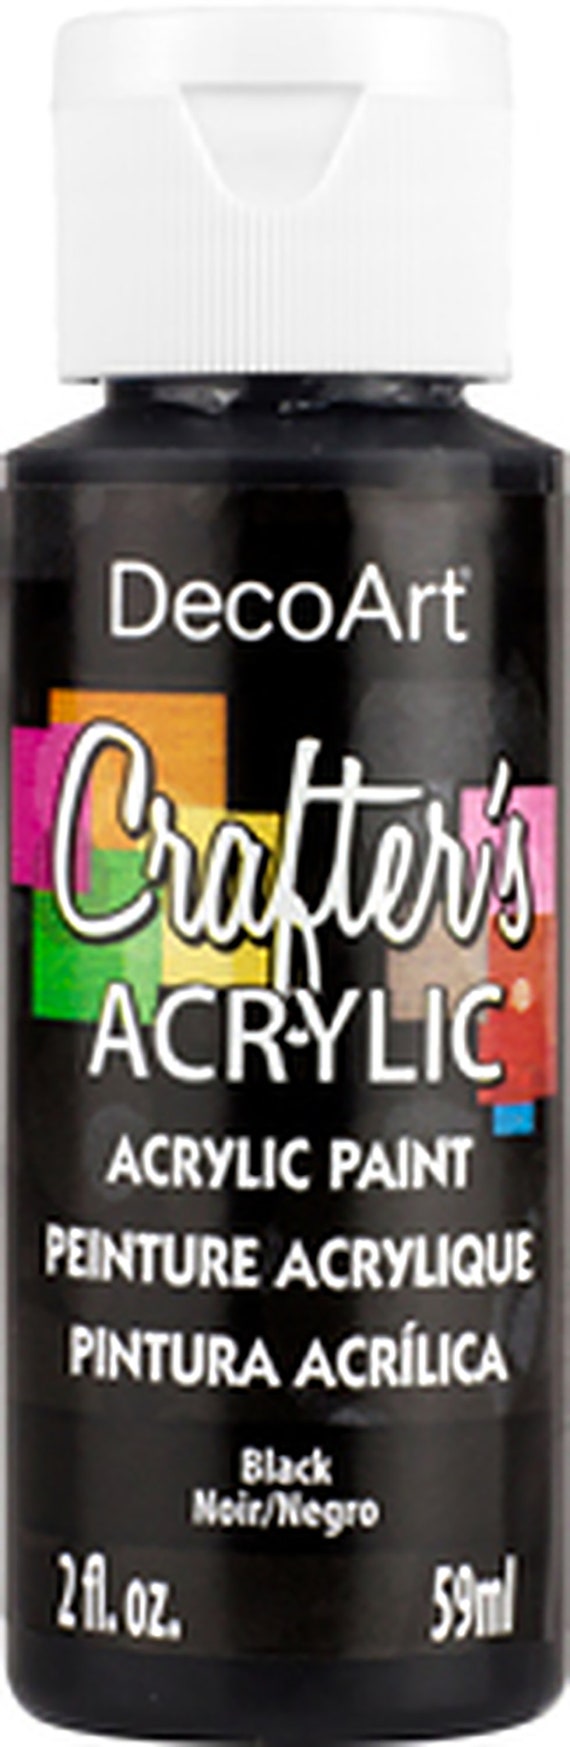 Decoart Crafters Acrylic Paint Blue Shades 59ml 2oz Bottles 